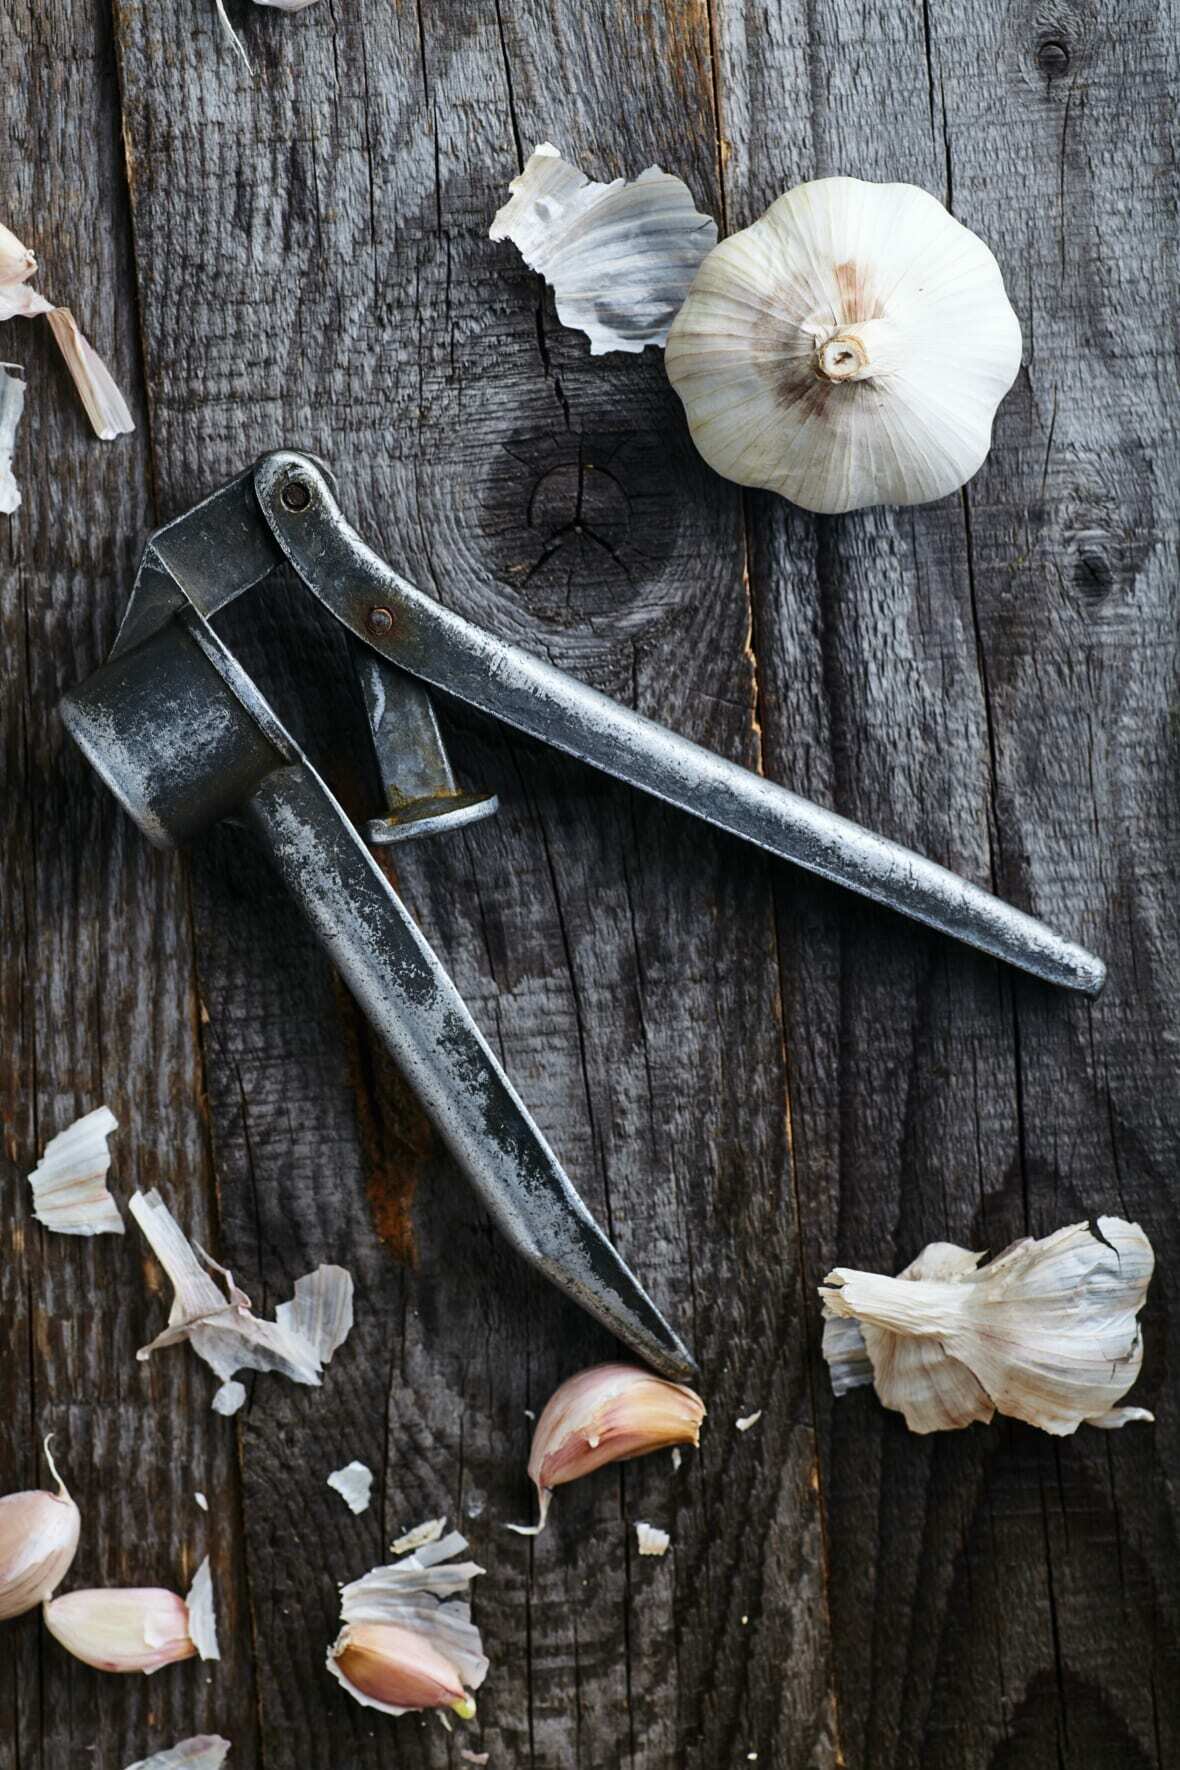 What is a garlic press?